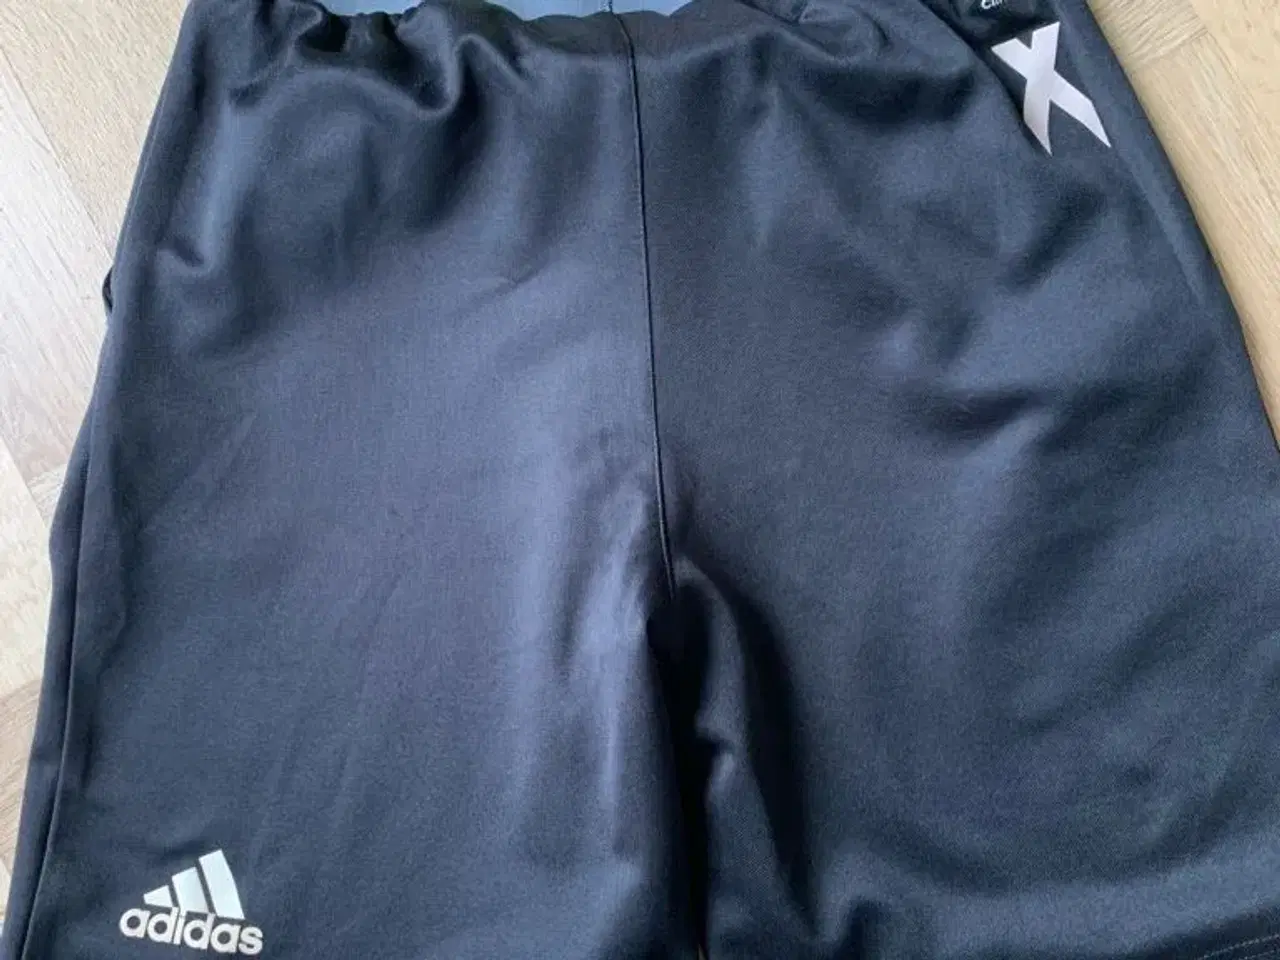 Billede 2 - Adidas trænings shorts